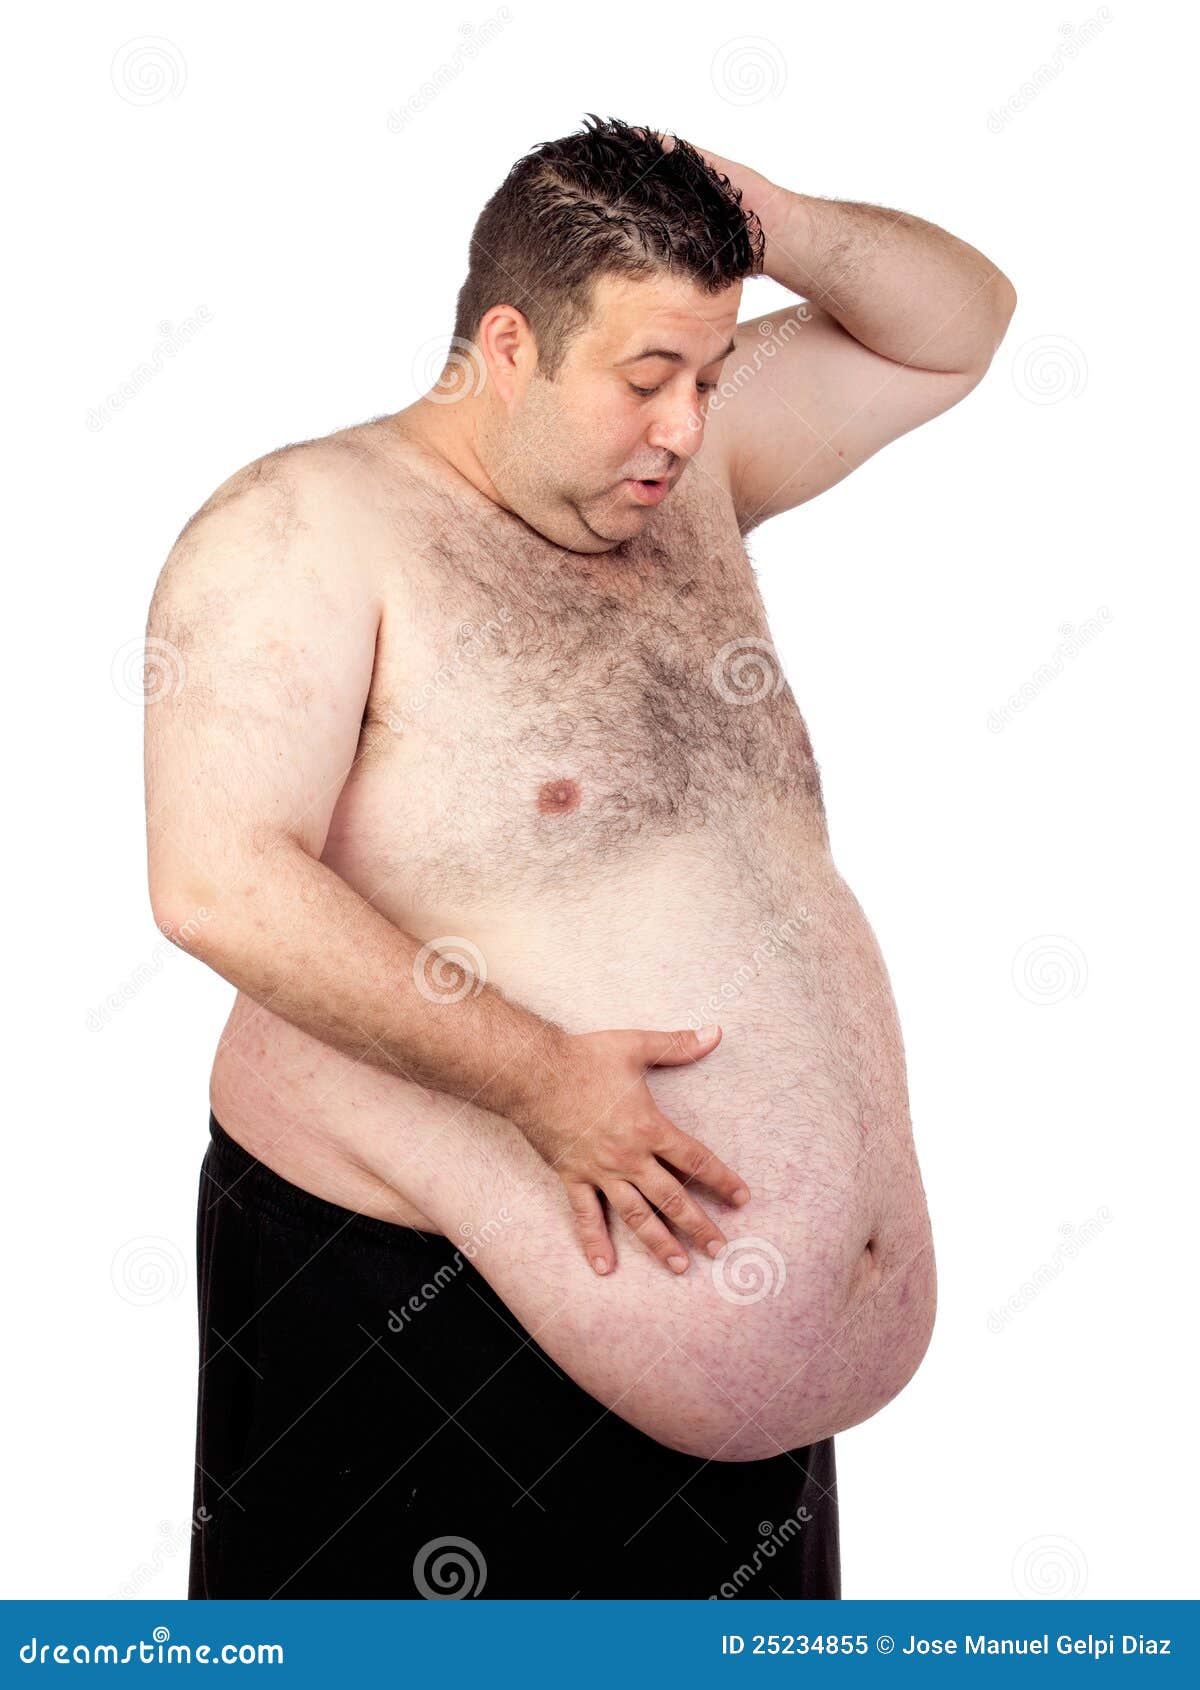 Pictures Of Fat Men 15